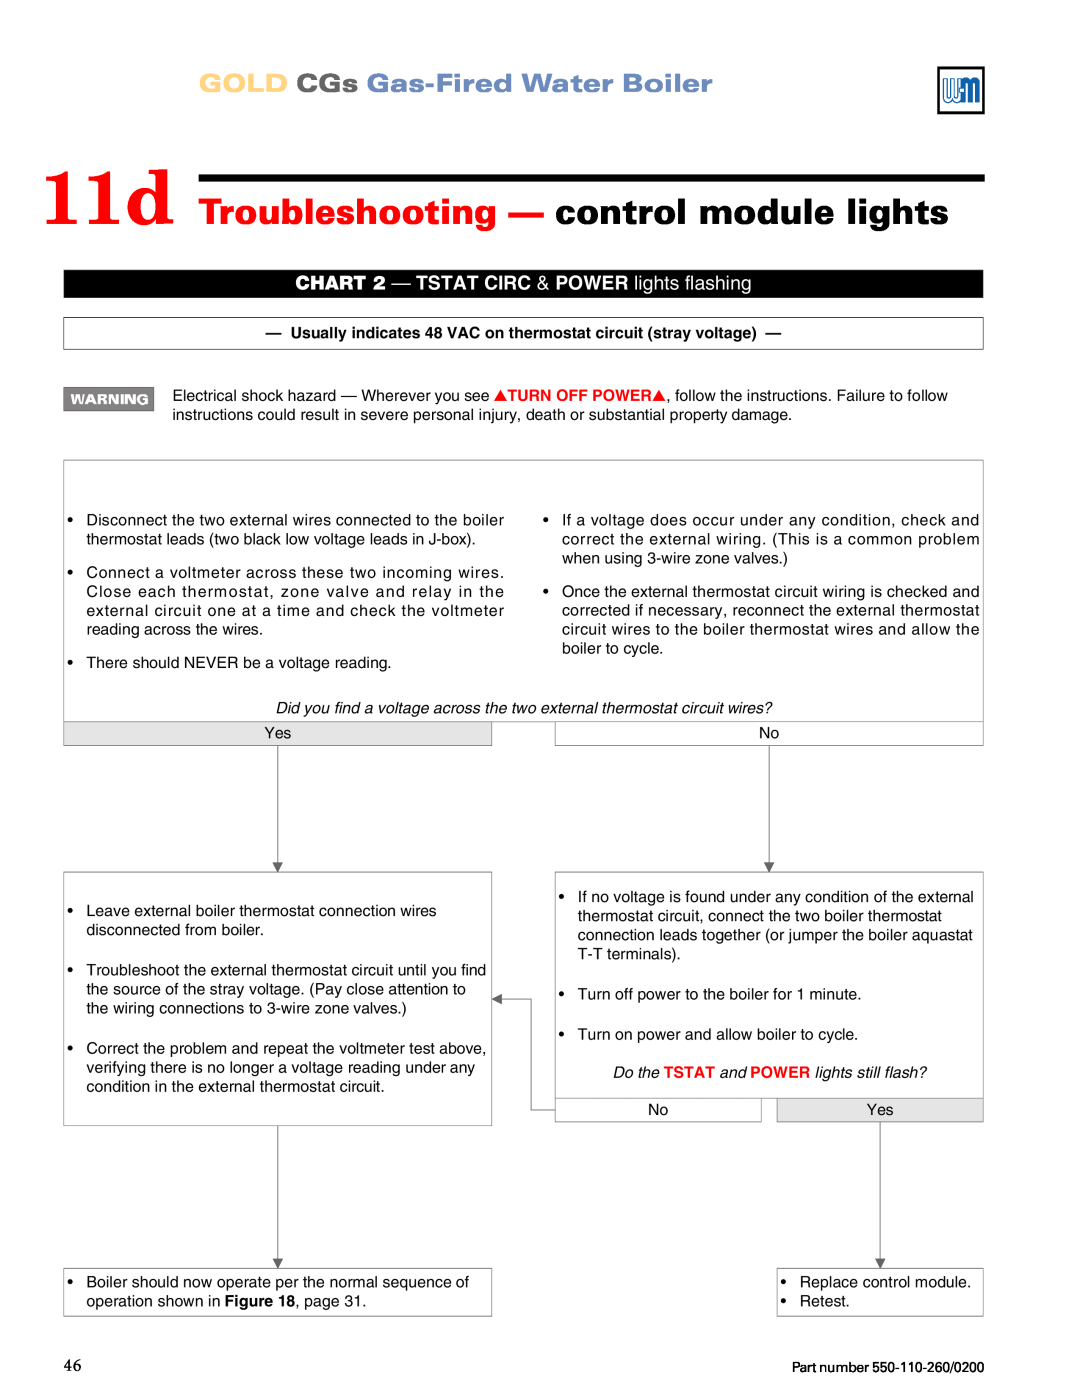 Weil-McLain 550-110-260/02002 manual 11d Troubleshooting — control module lights, GOLD CGs Gas-FiredWater Boiler 